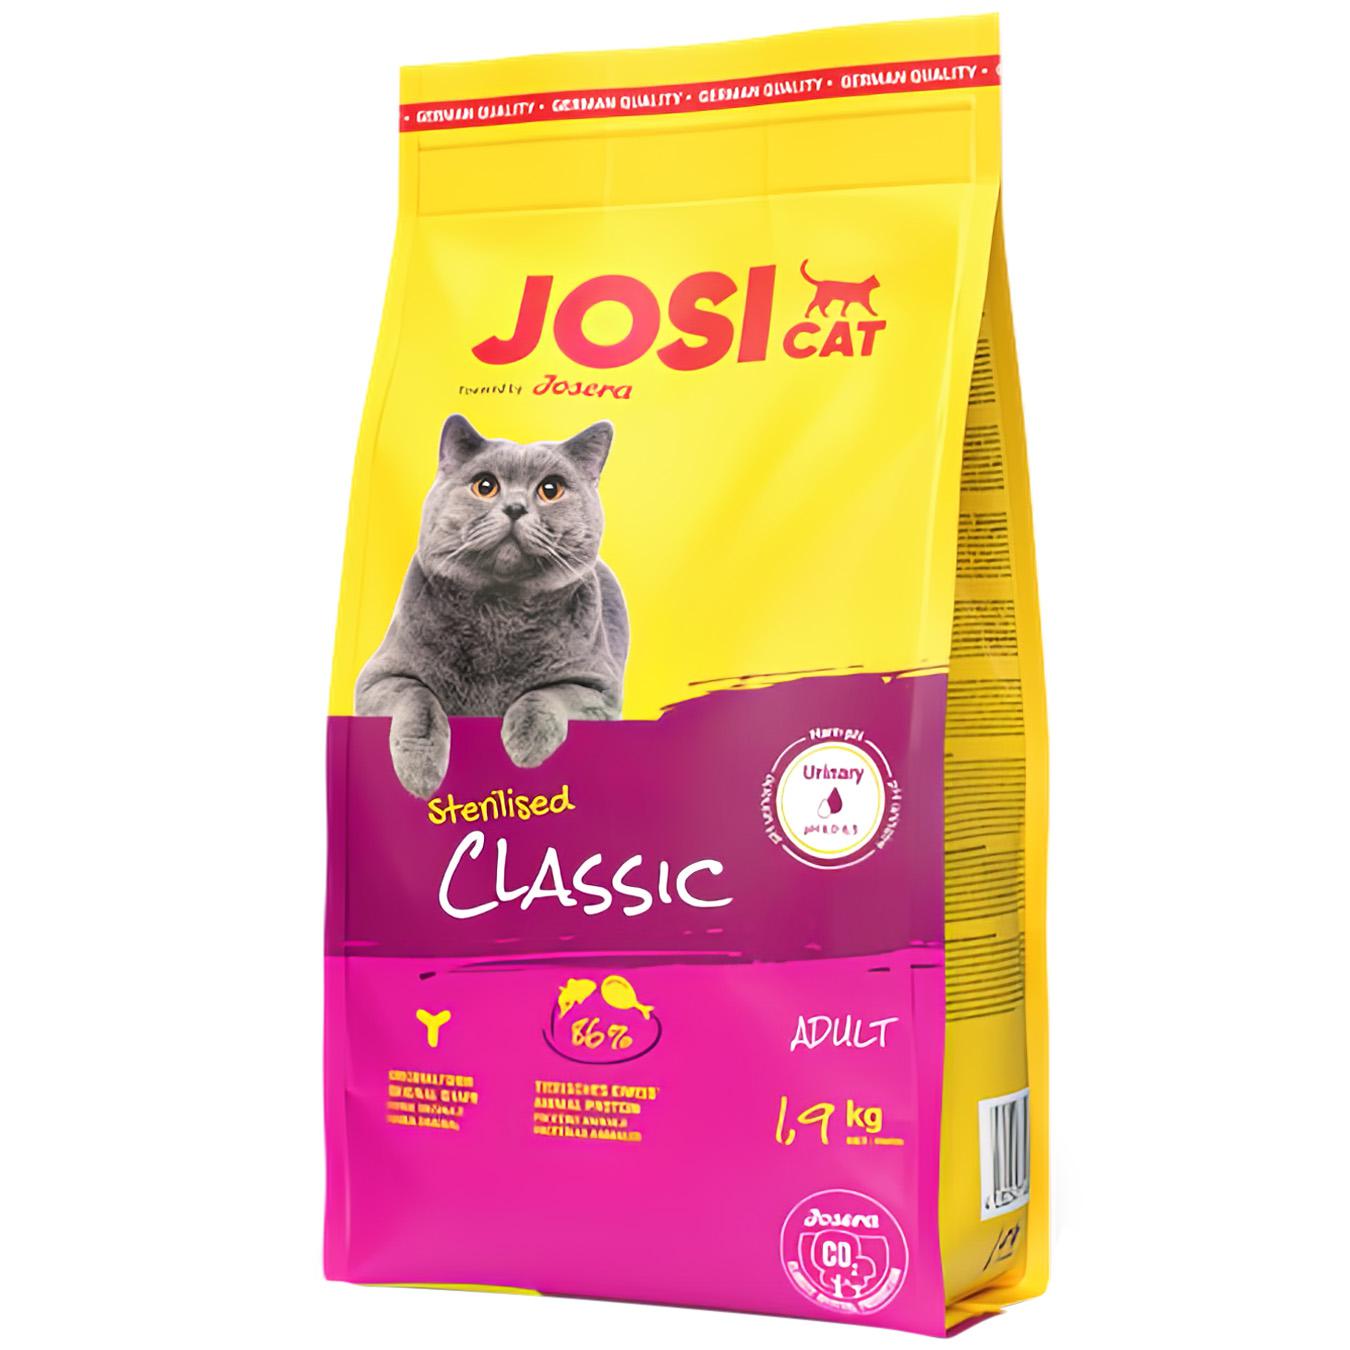 Josicat dry food for sterilized cats 1.9 kg